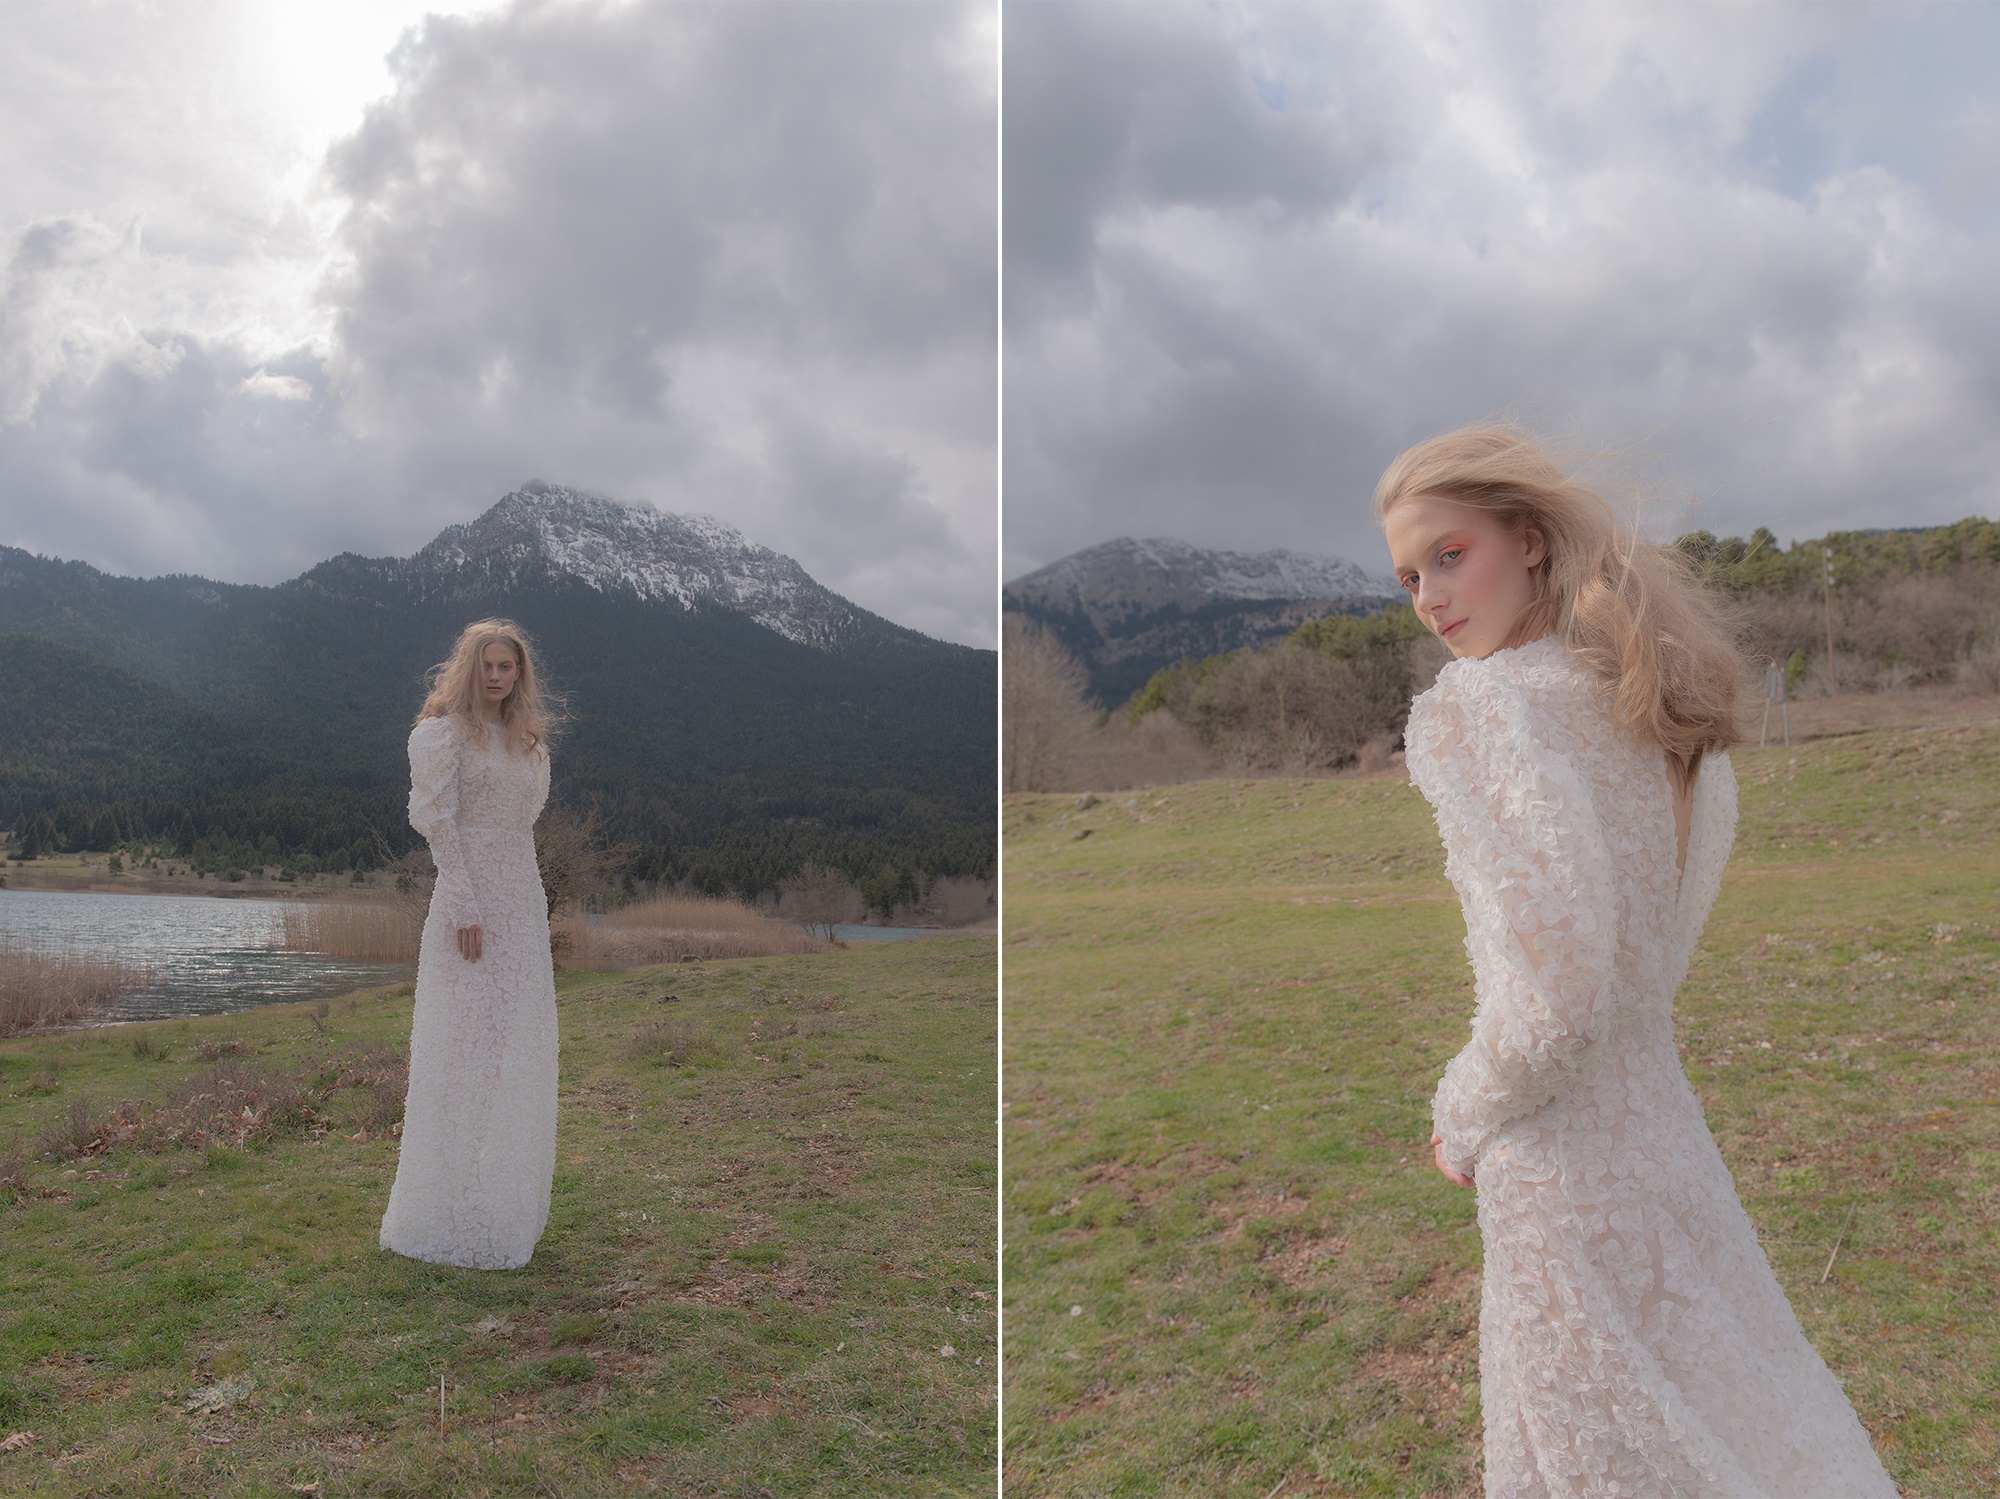 Ethereal boho wedding dresses by Alexia Kirmitsi